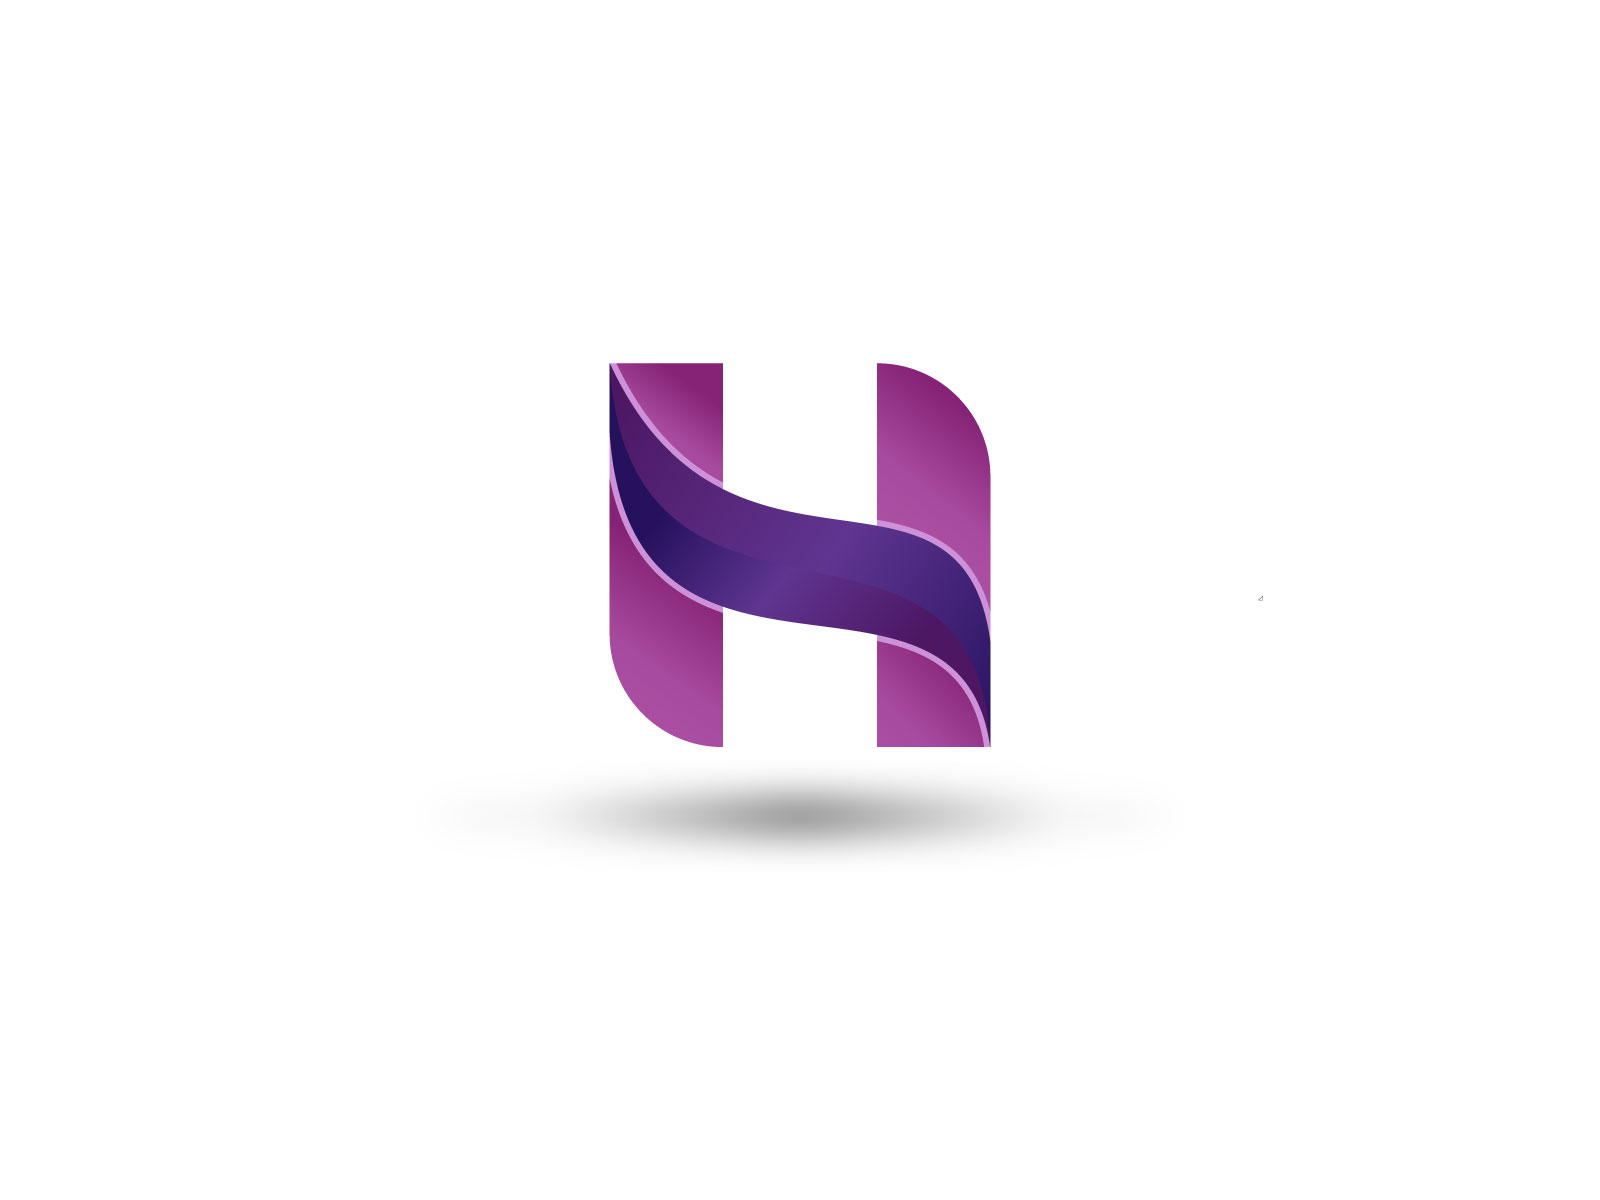 H logo by Md Rajib Hossain on Dribbble